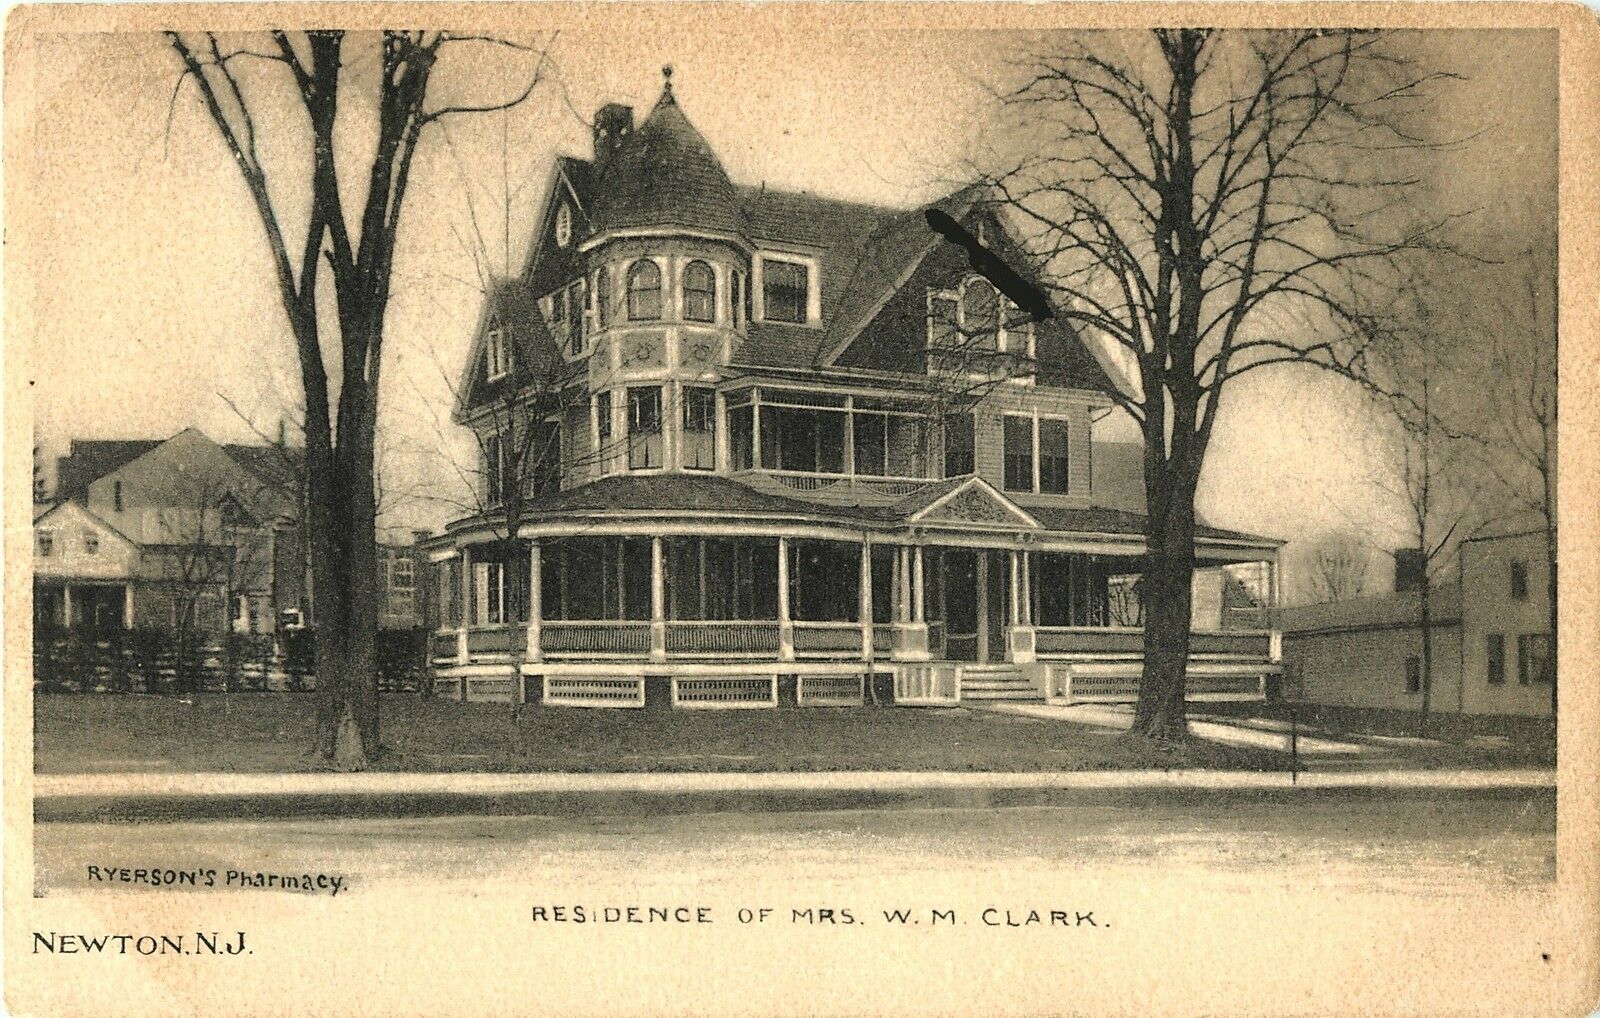 Newton - W M Clark residence - c 1910s